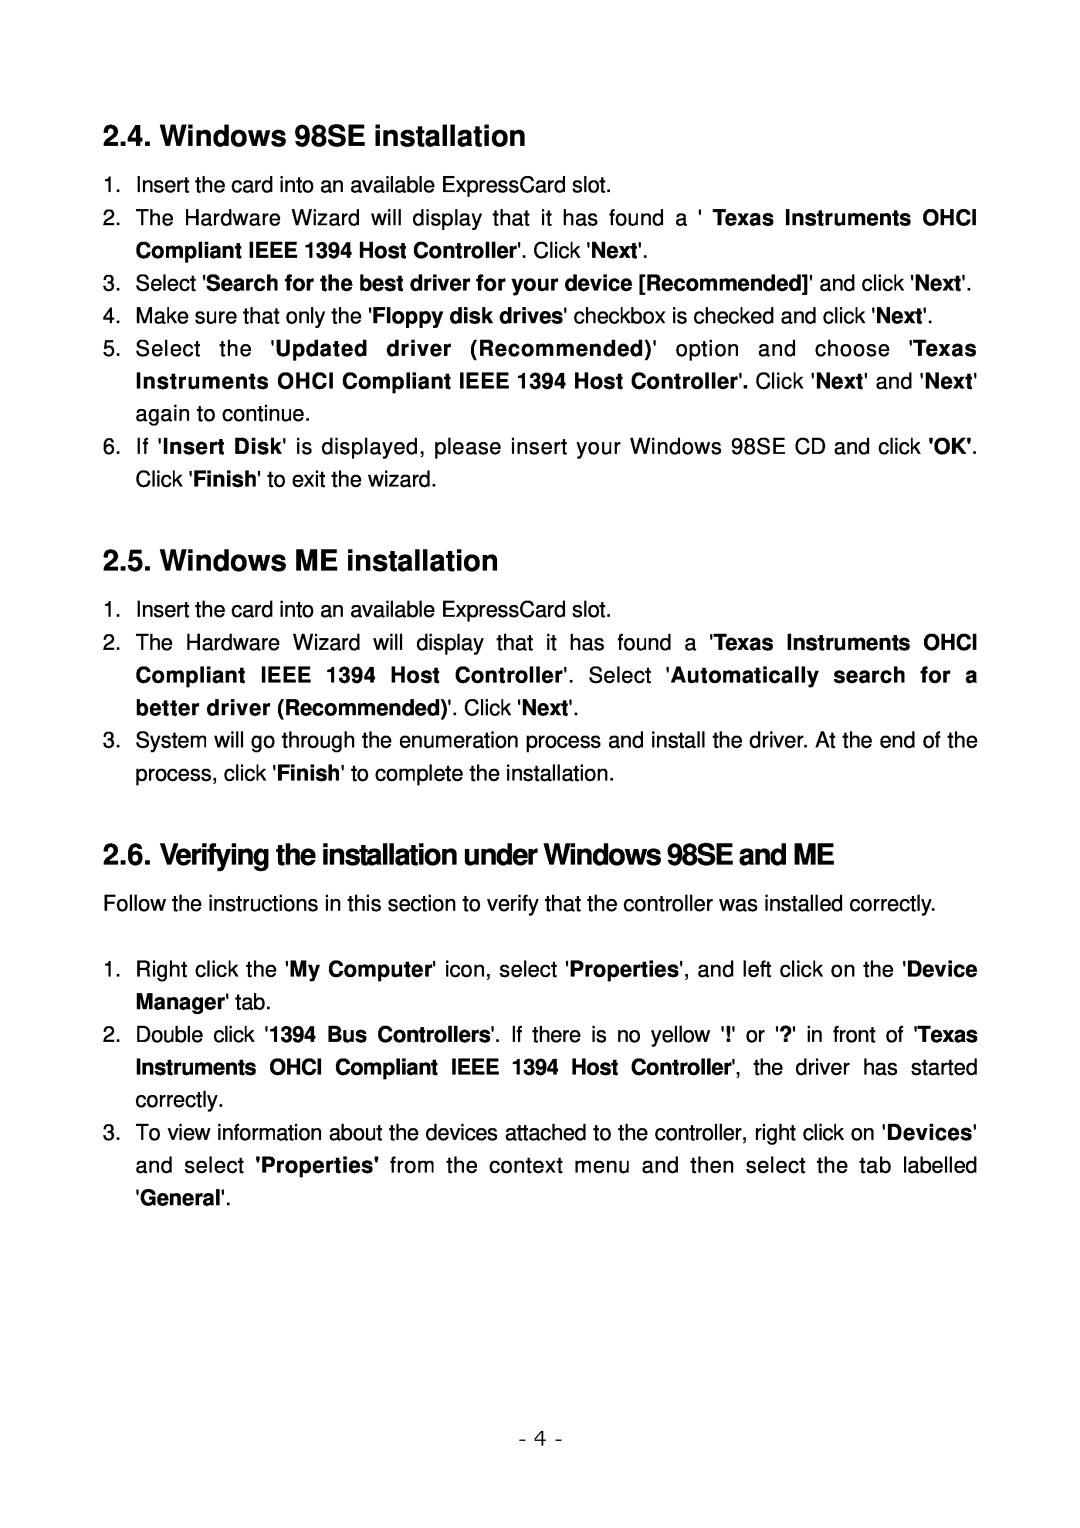 Lindy 51500 Windows 98SE installation, Windows ME installation, Verifying the installation under Windows 98SE and ME 